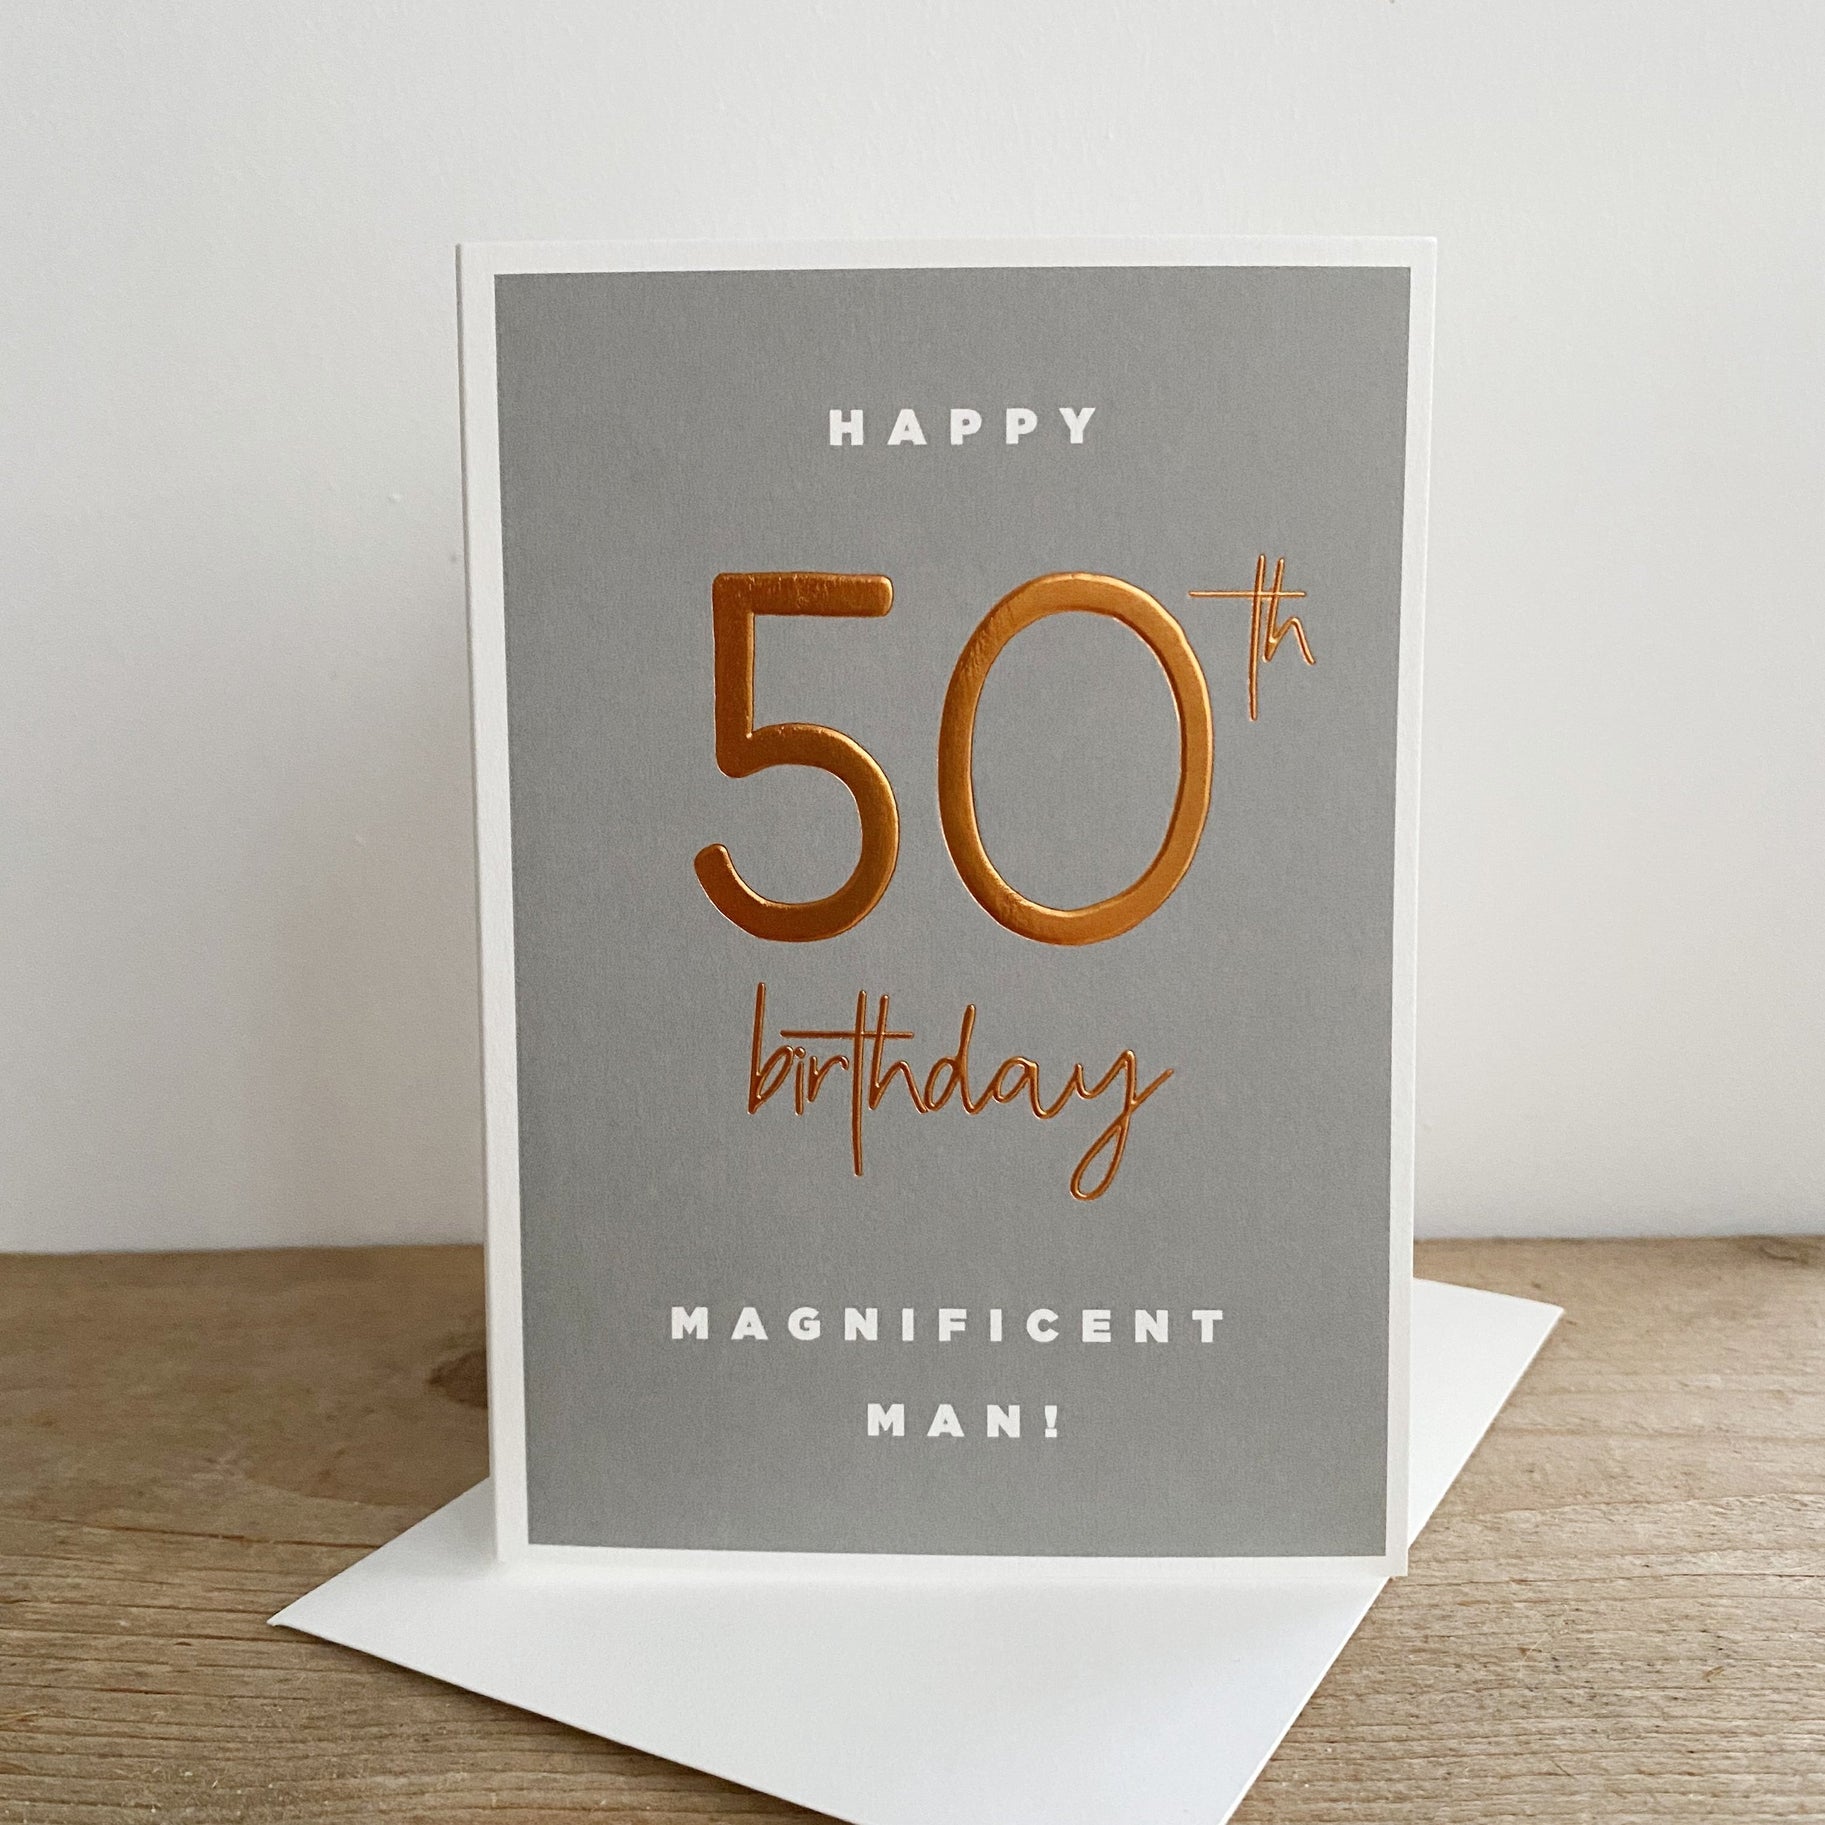 Happy 50th Birthday Magnificent Man! - Birthday Greeting Card - Mellow Monkey